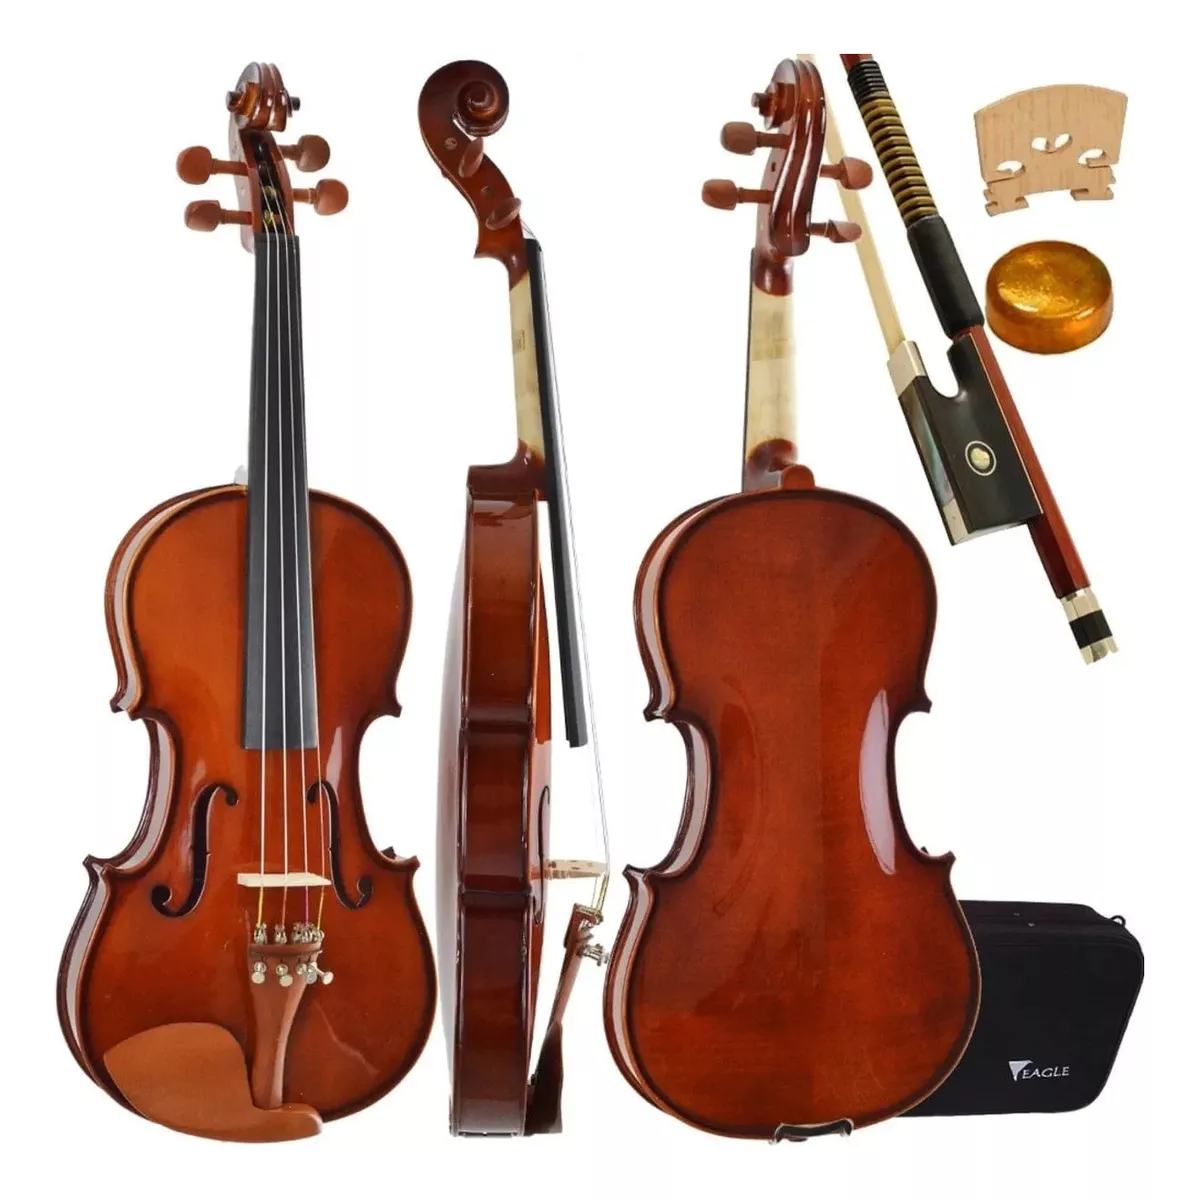 Primeira imagem para pesquisa de violino stradivarius